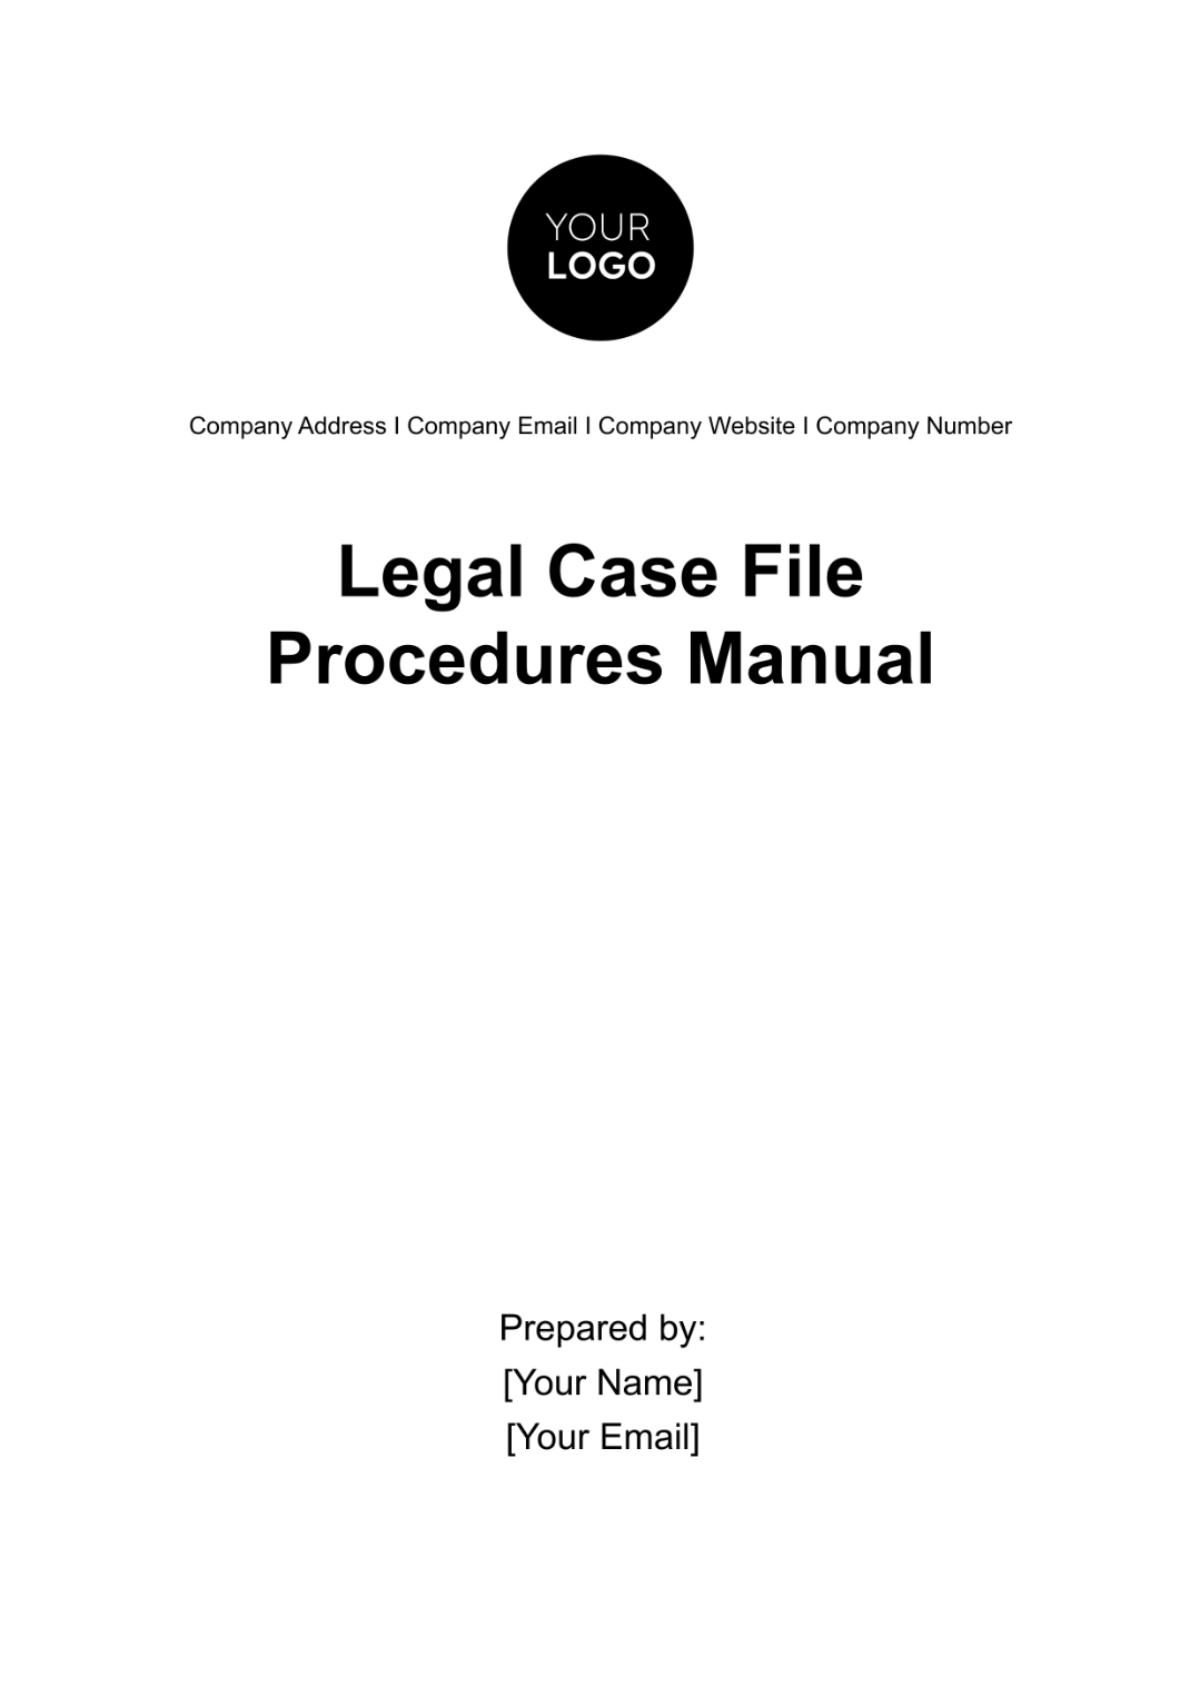 Legal Case File Procedures Manual Template